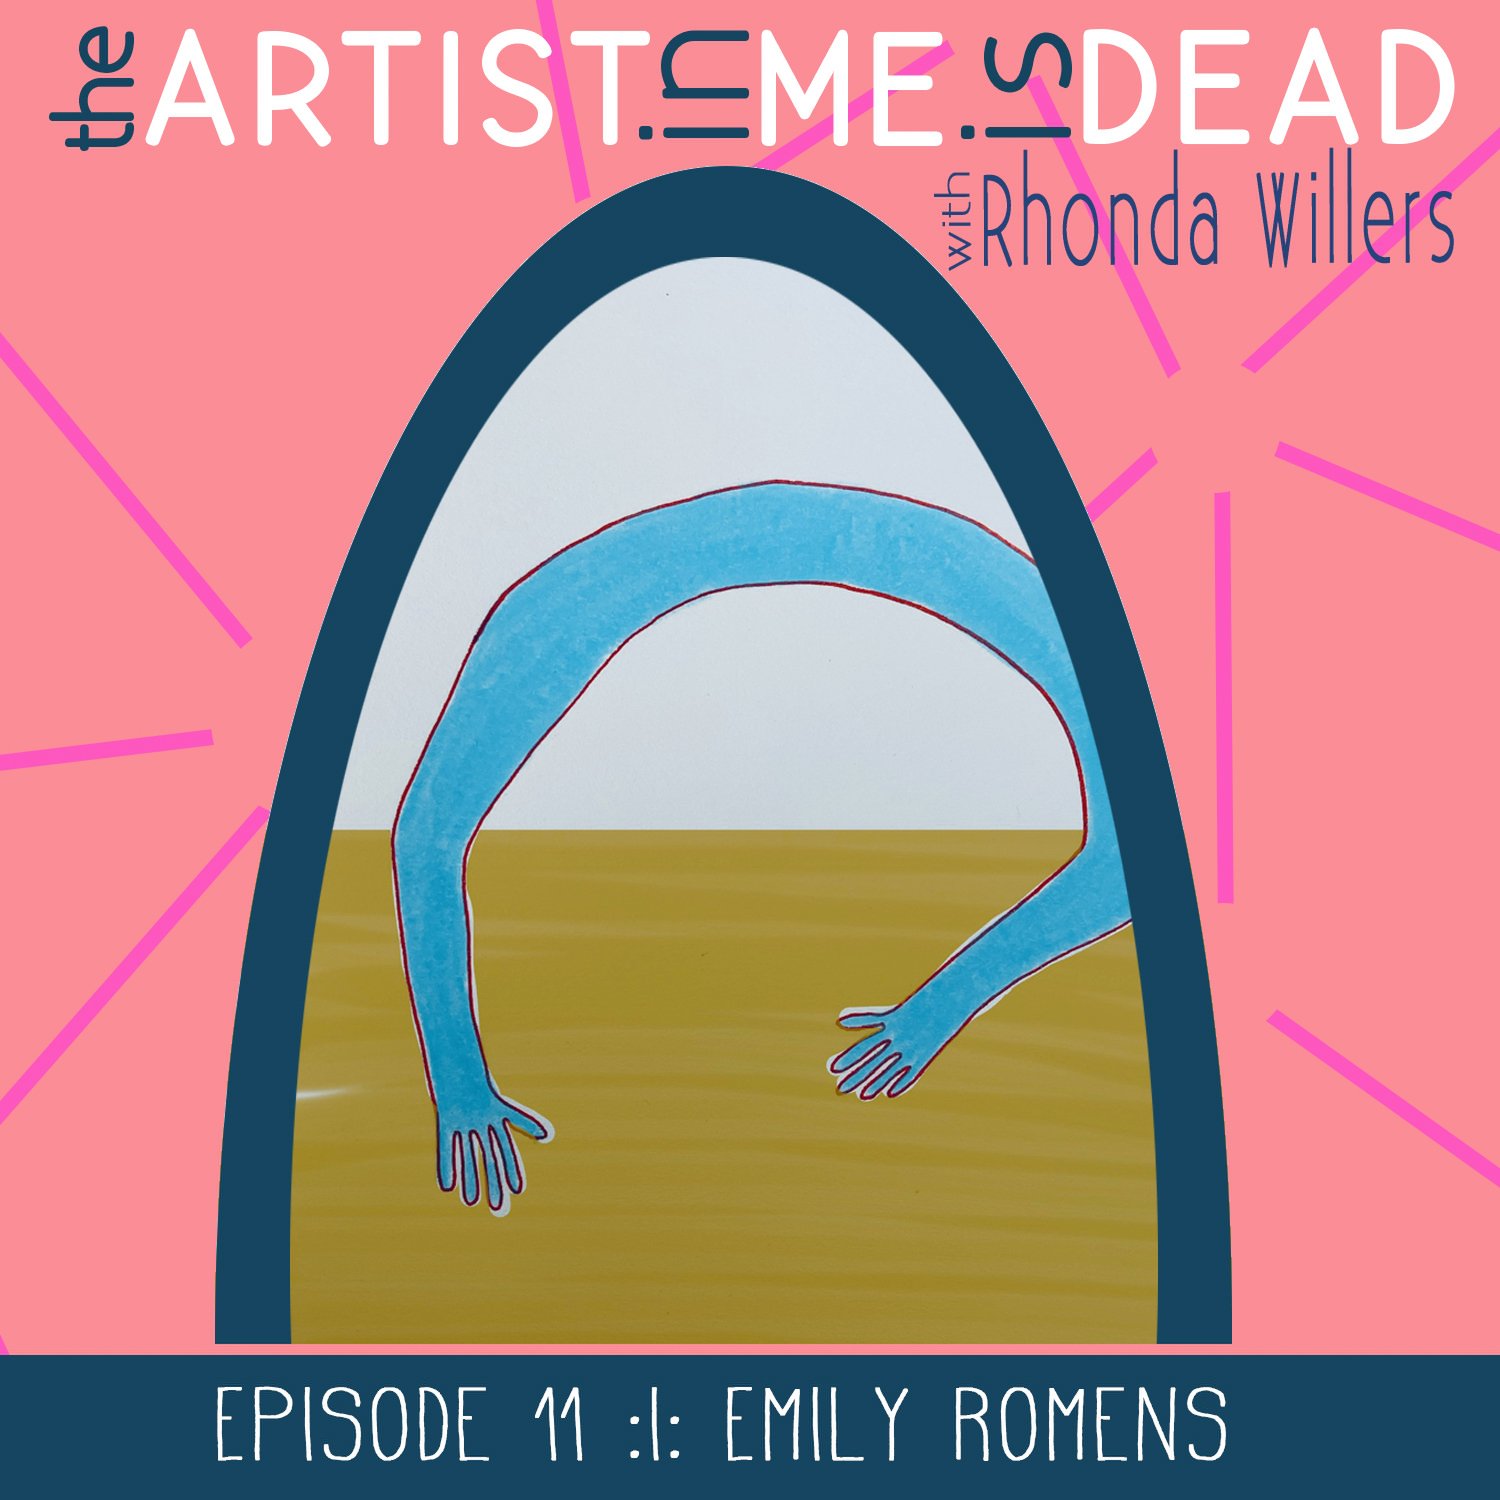 01_episode11_emily_romens_the-artist-in-me-is-dead-podcast_season1.jpeg